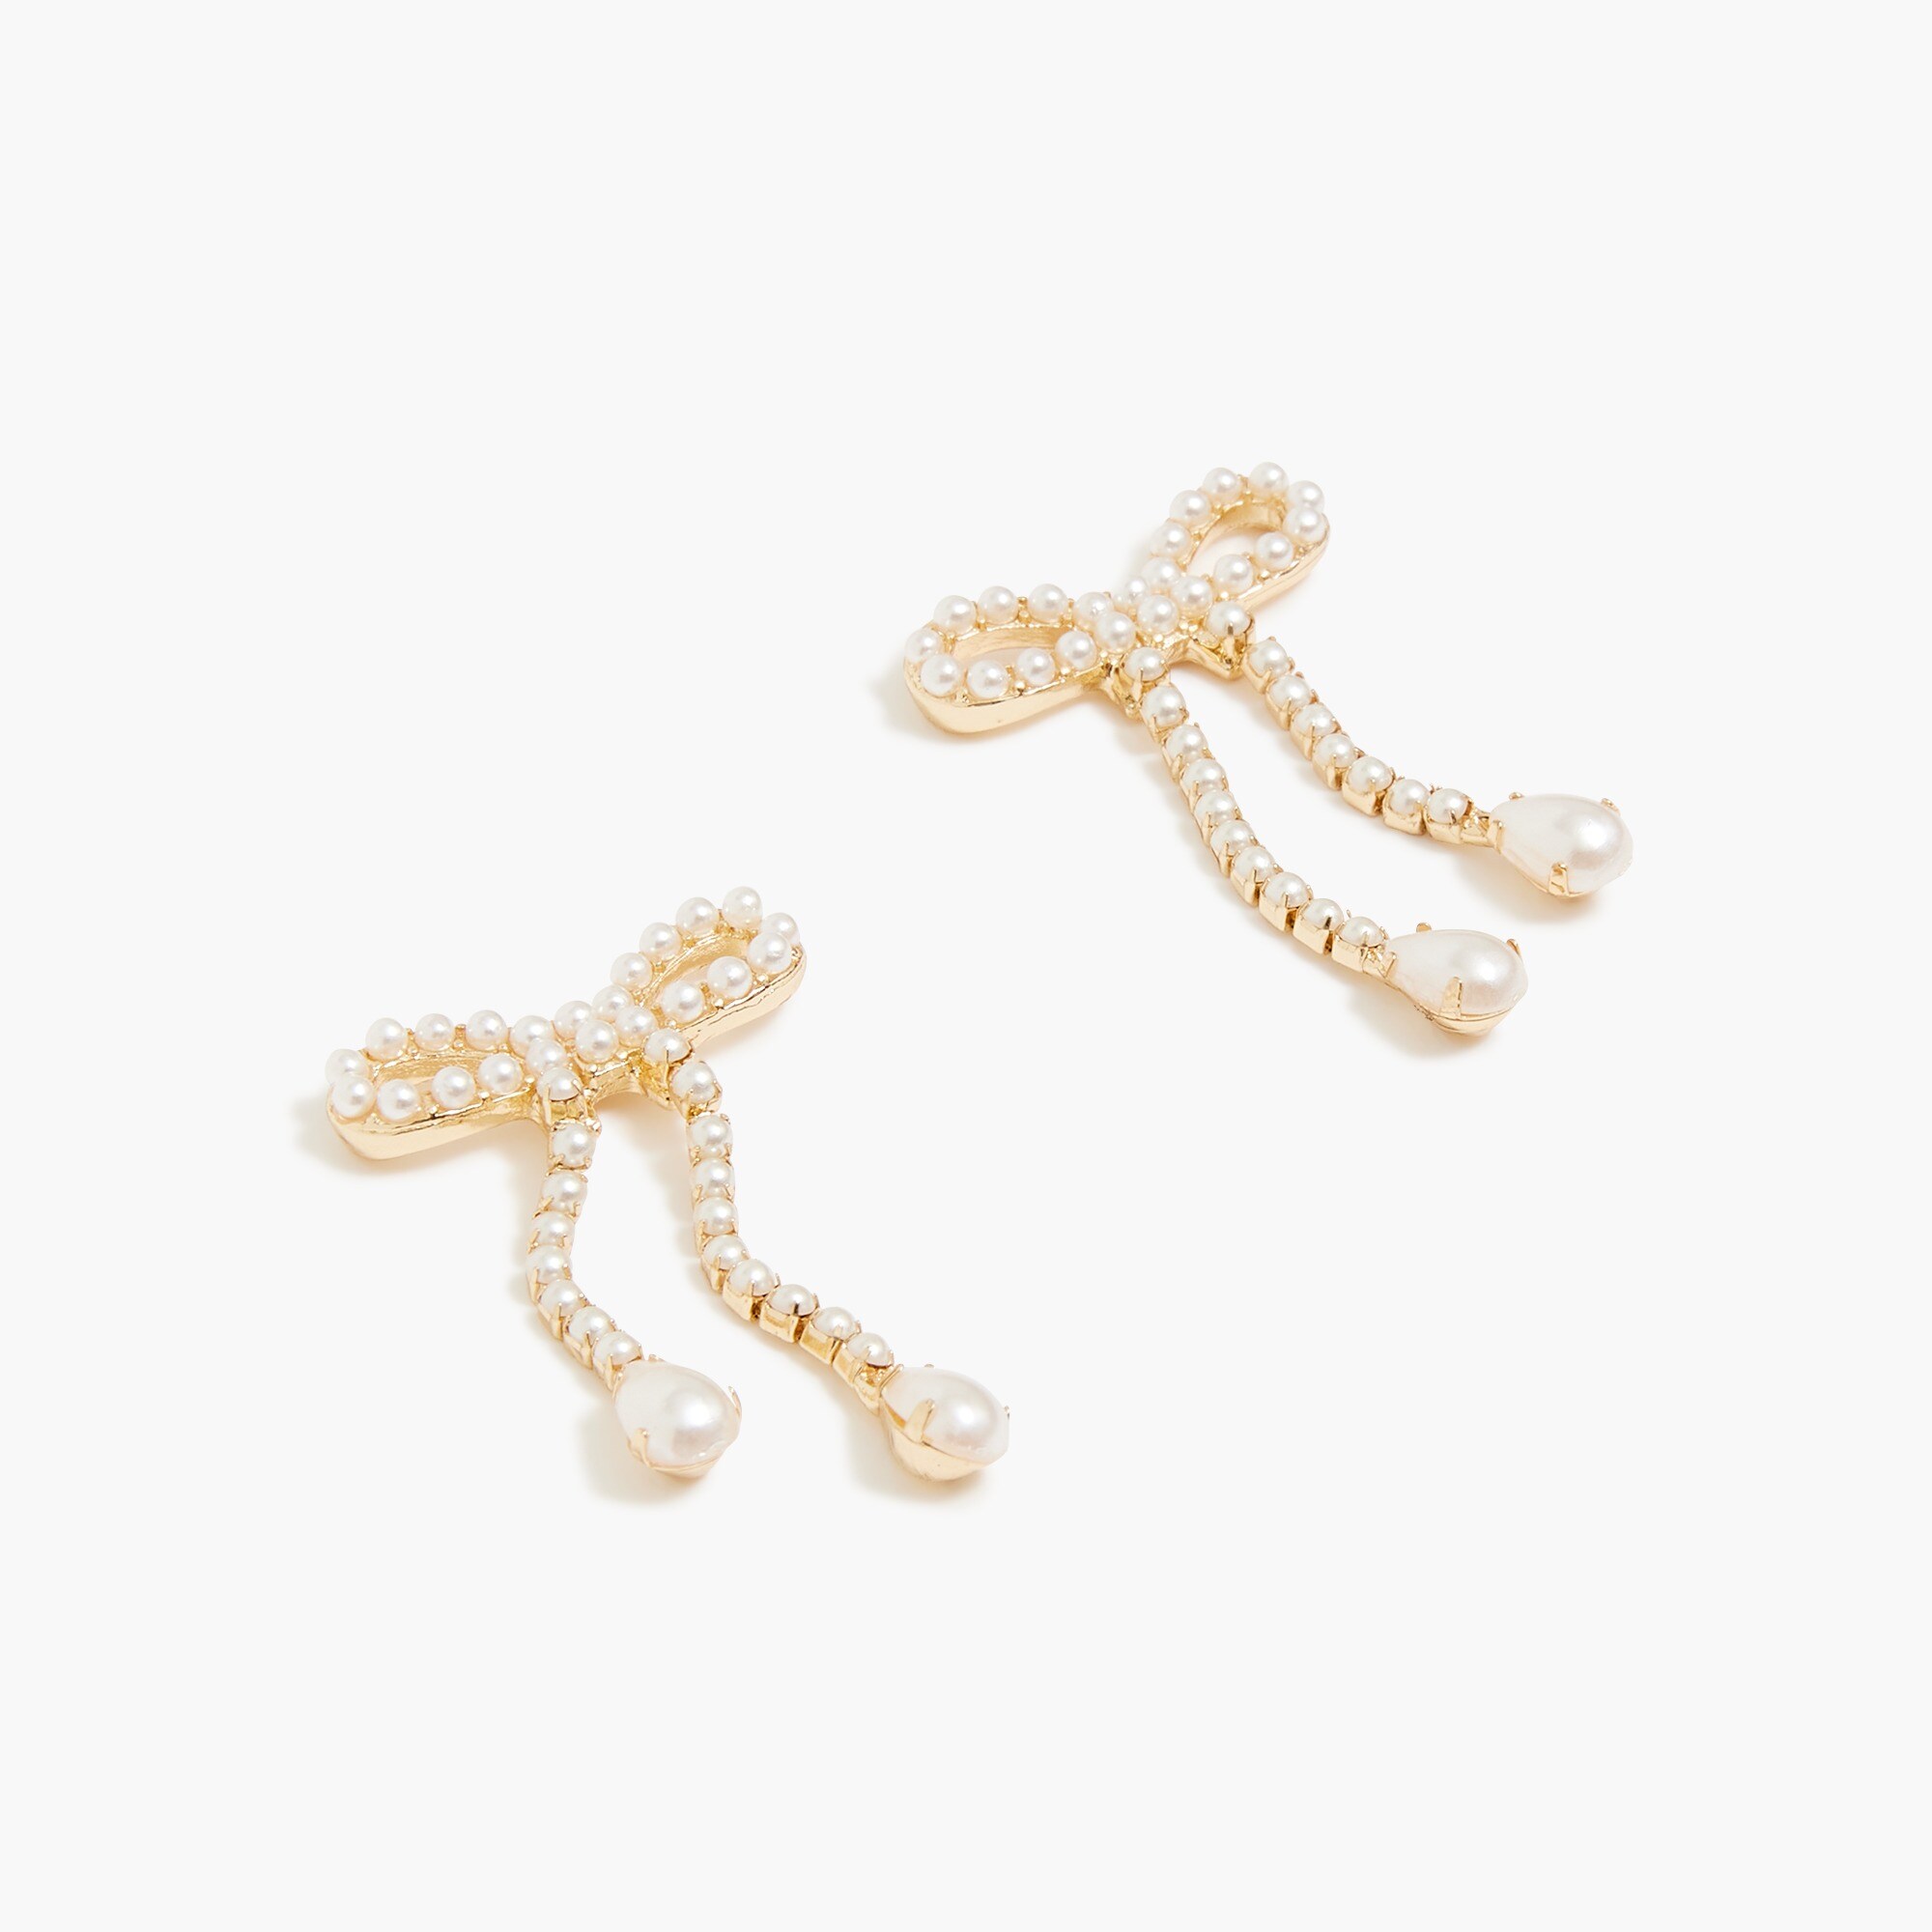  Pearl bow earrings